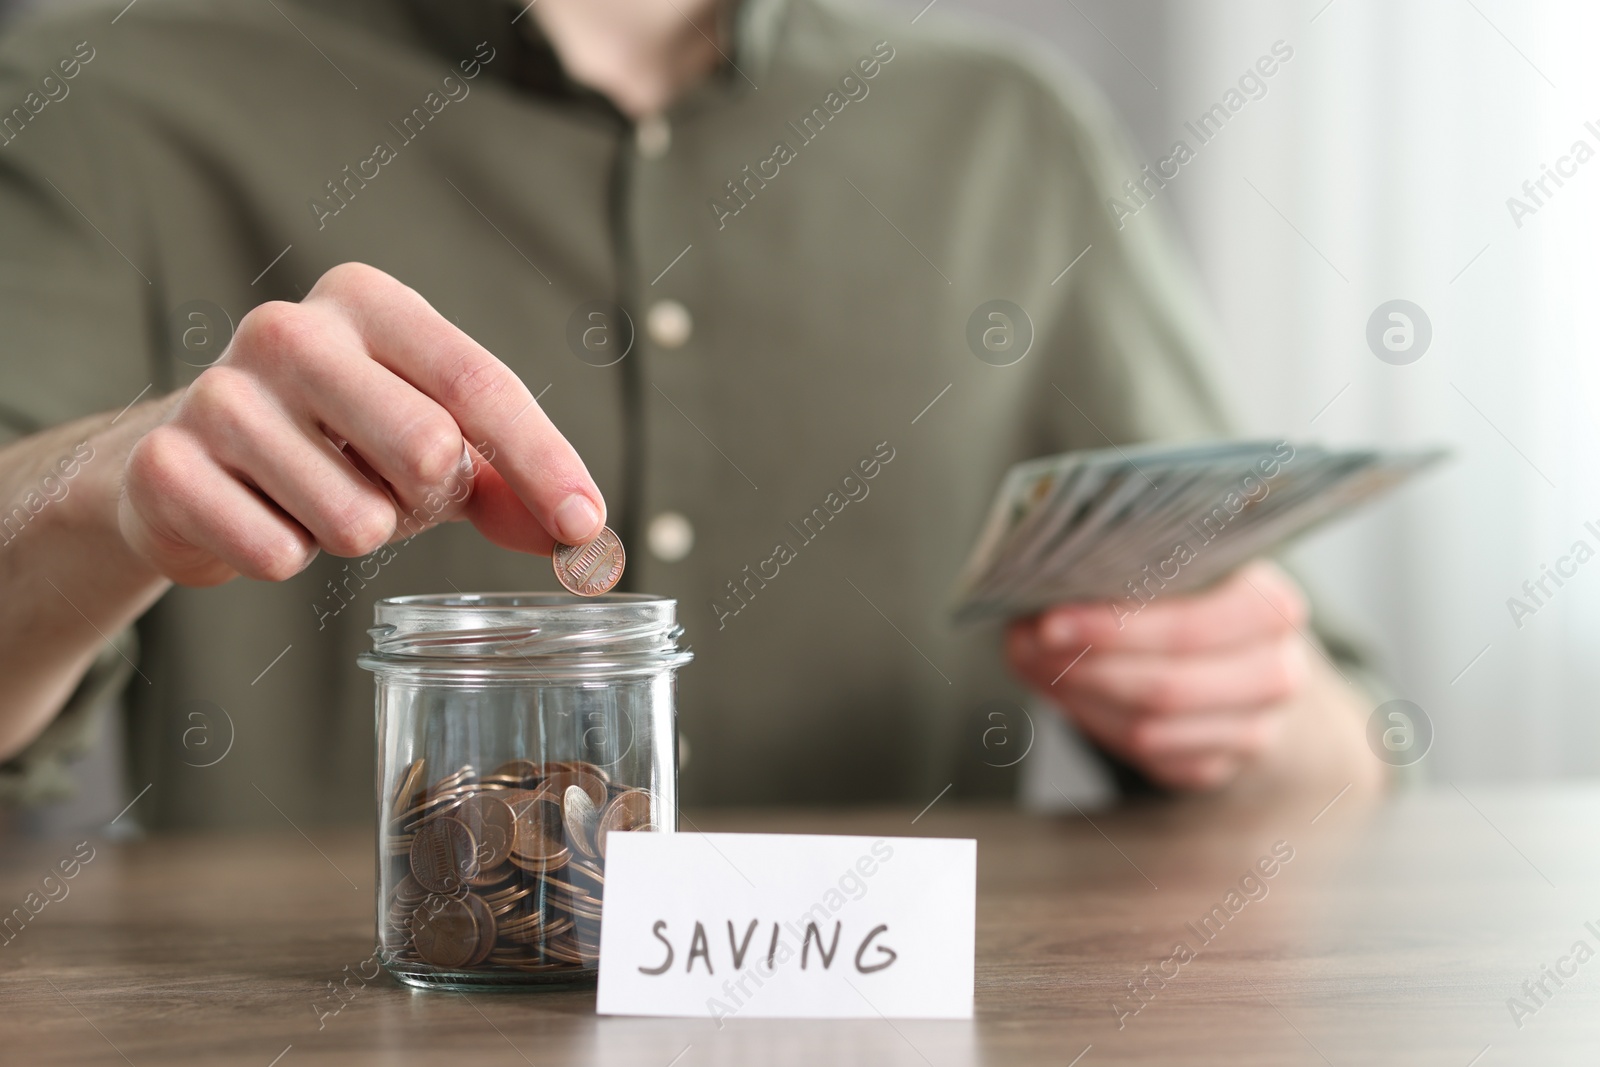 Photo of Financial savings. Man putting coin into glass jar at wooden table, closeup